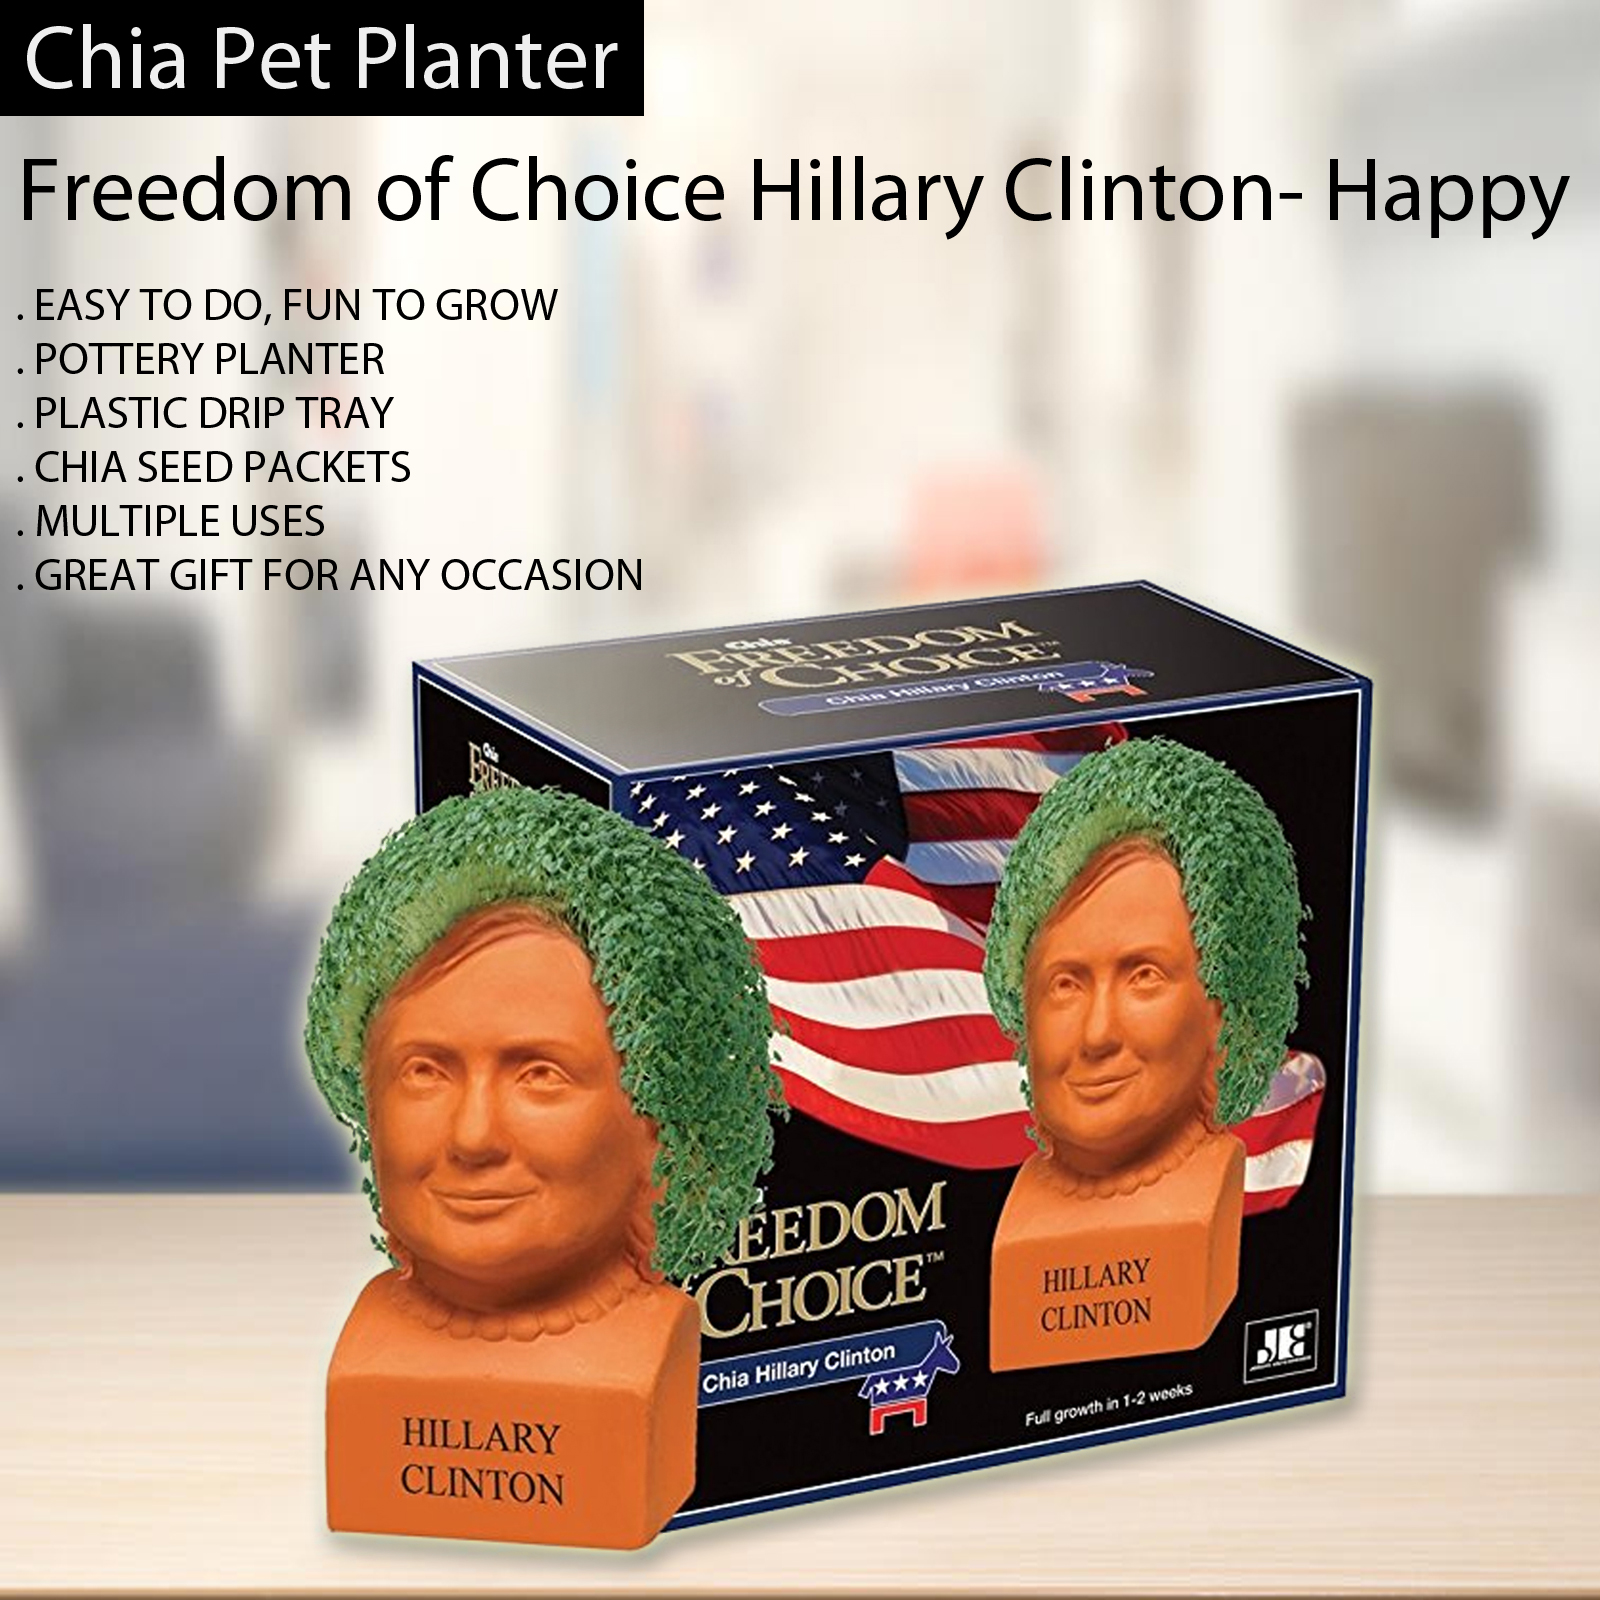 Chia Pet Planter - Freedom of Choice Hillary Clinton- Happy